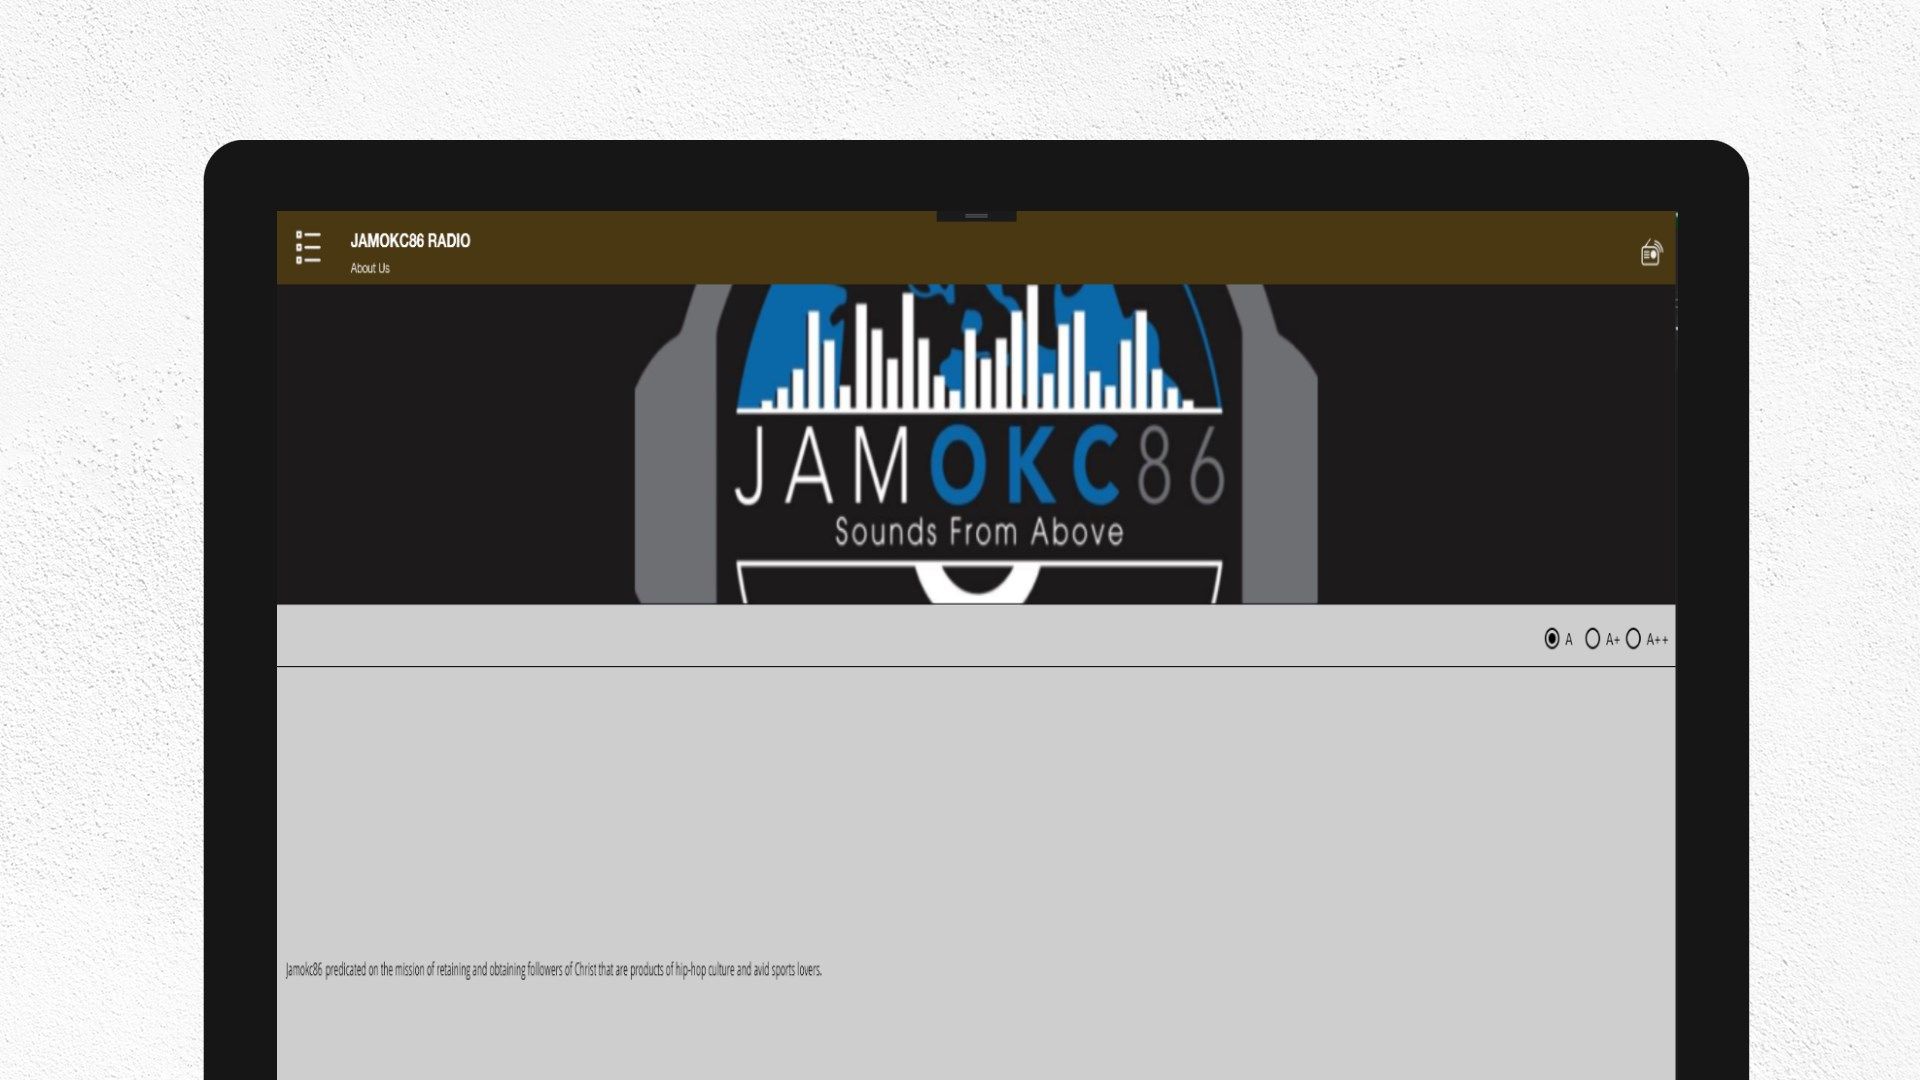 JAMOKC86 RADIO